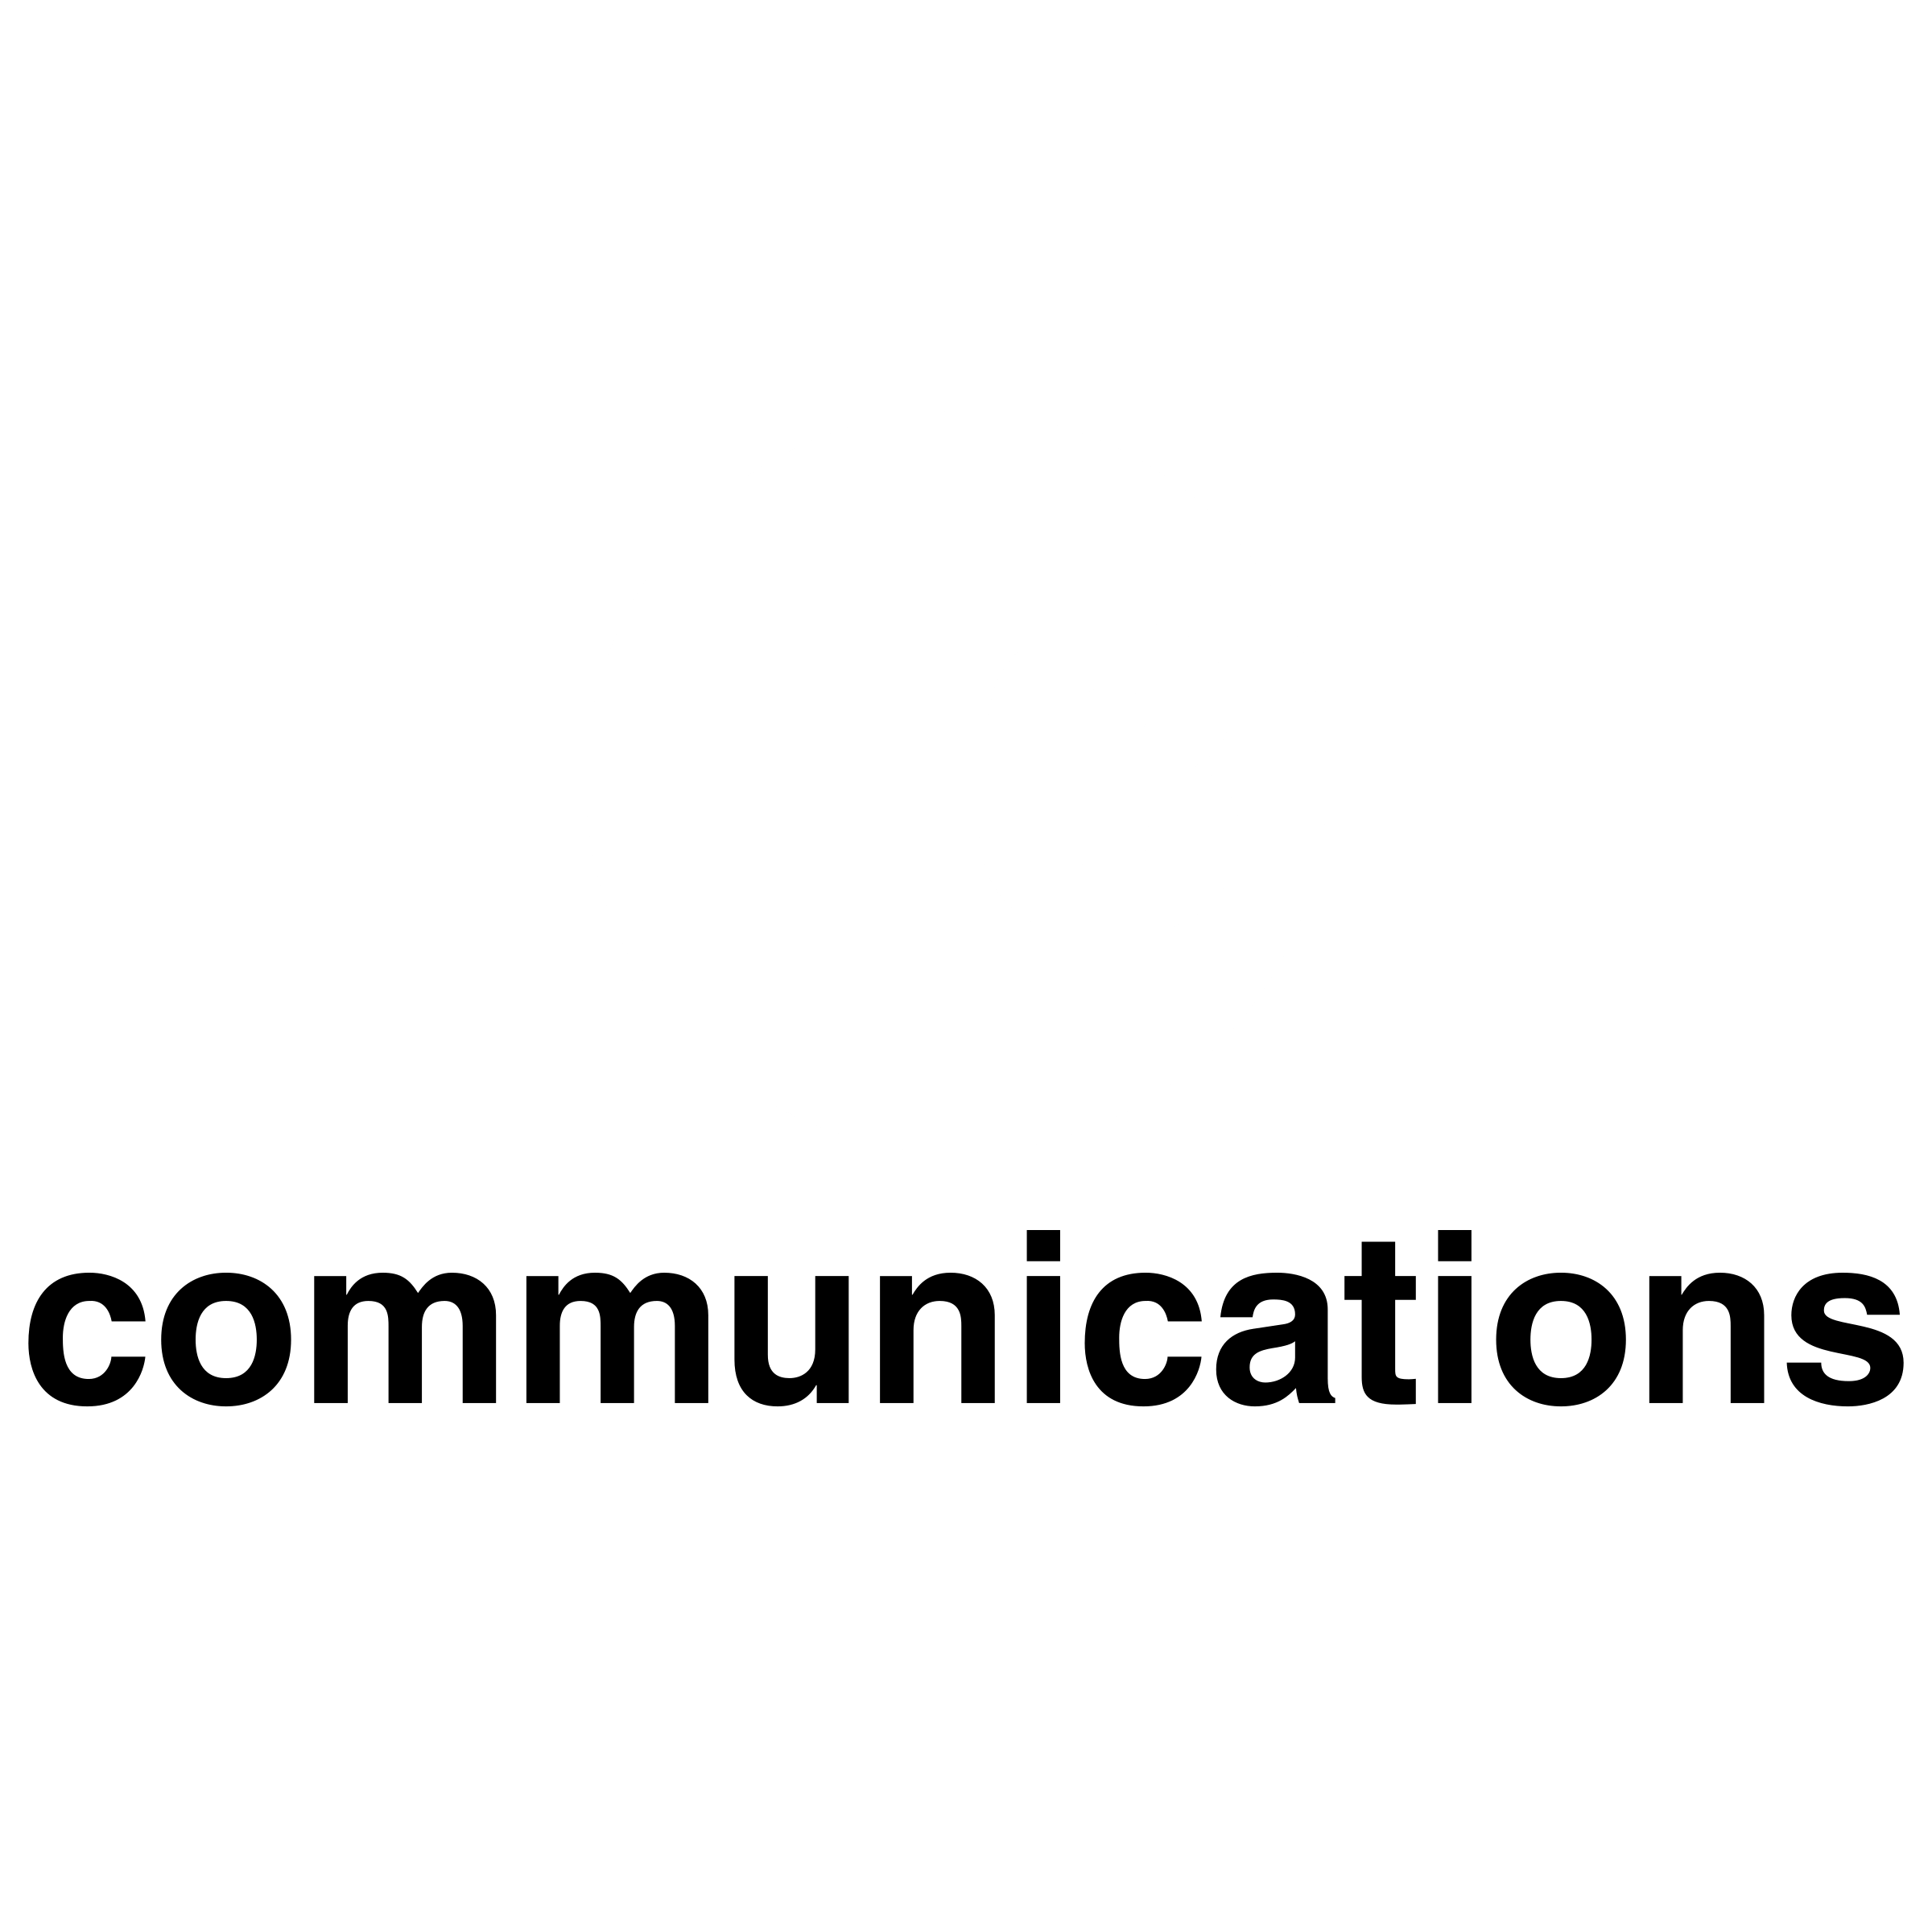 L-3 Communications Logo - L 3 Communications Logo PNG Transparent & SVG Vector - Freebie Supply